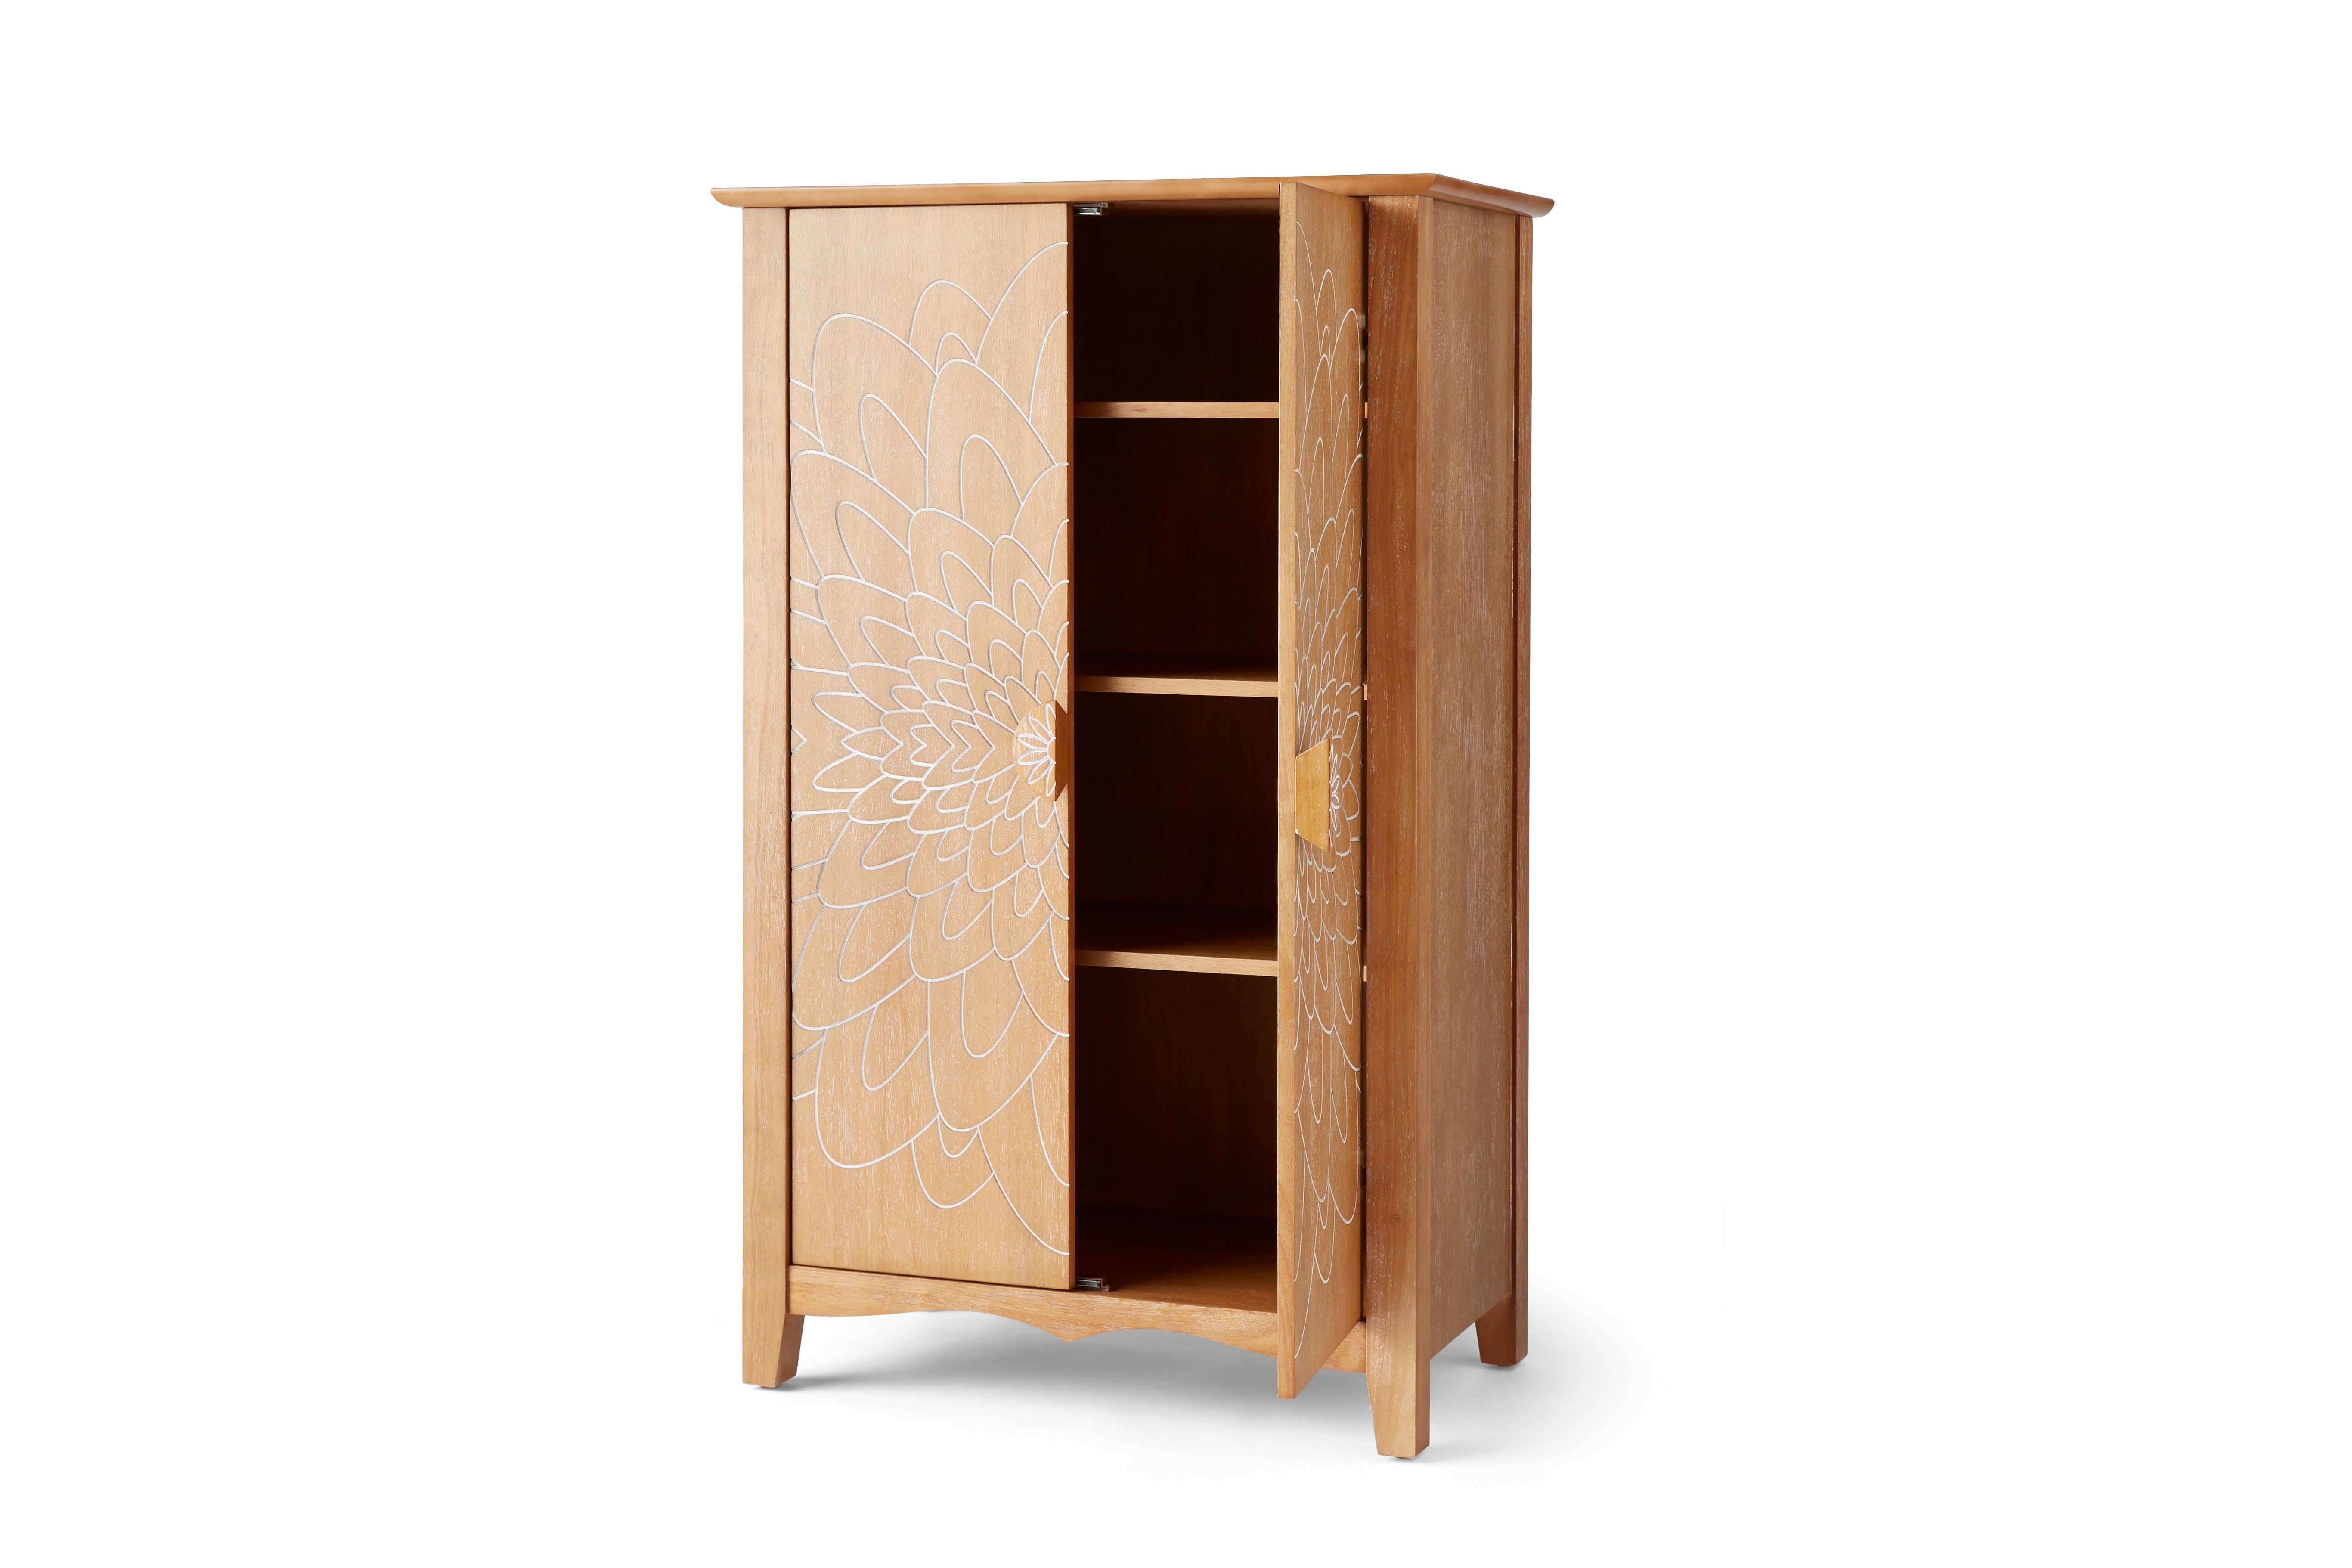 Carved Wood Storage Cabinet